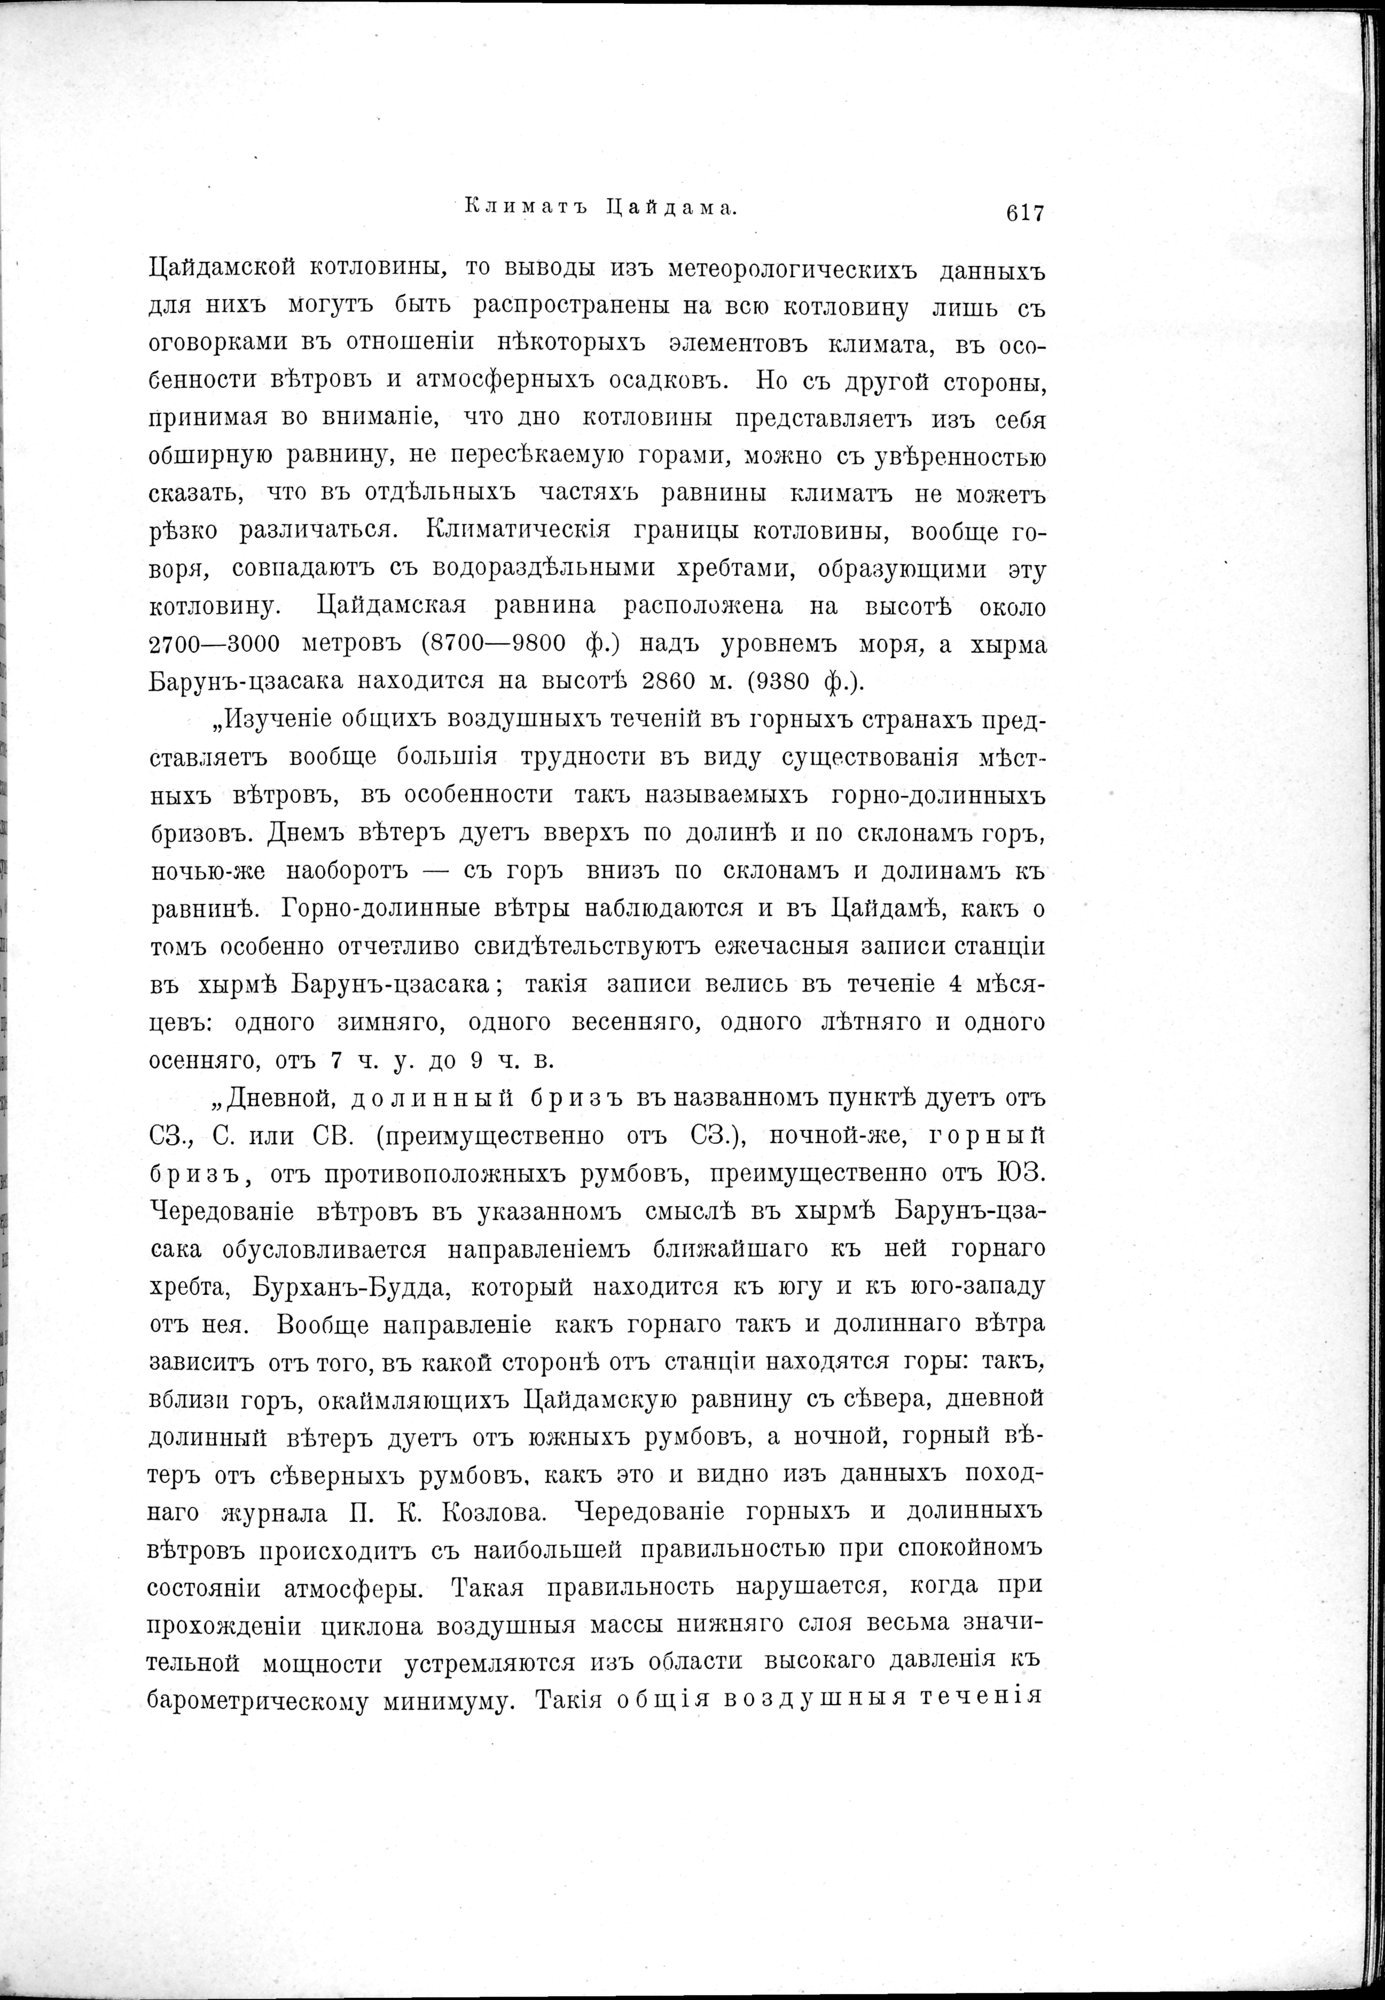 Mongoliia i Kam : vol.2 / Page 445 (Grayscale High Resolution Image)